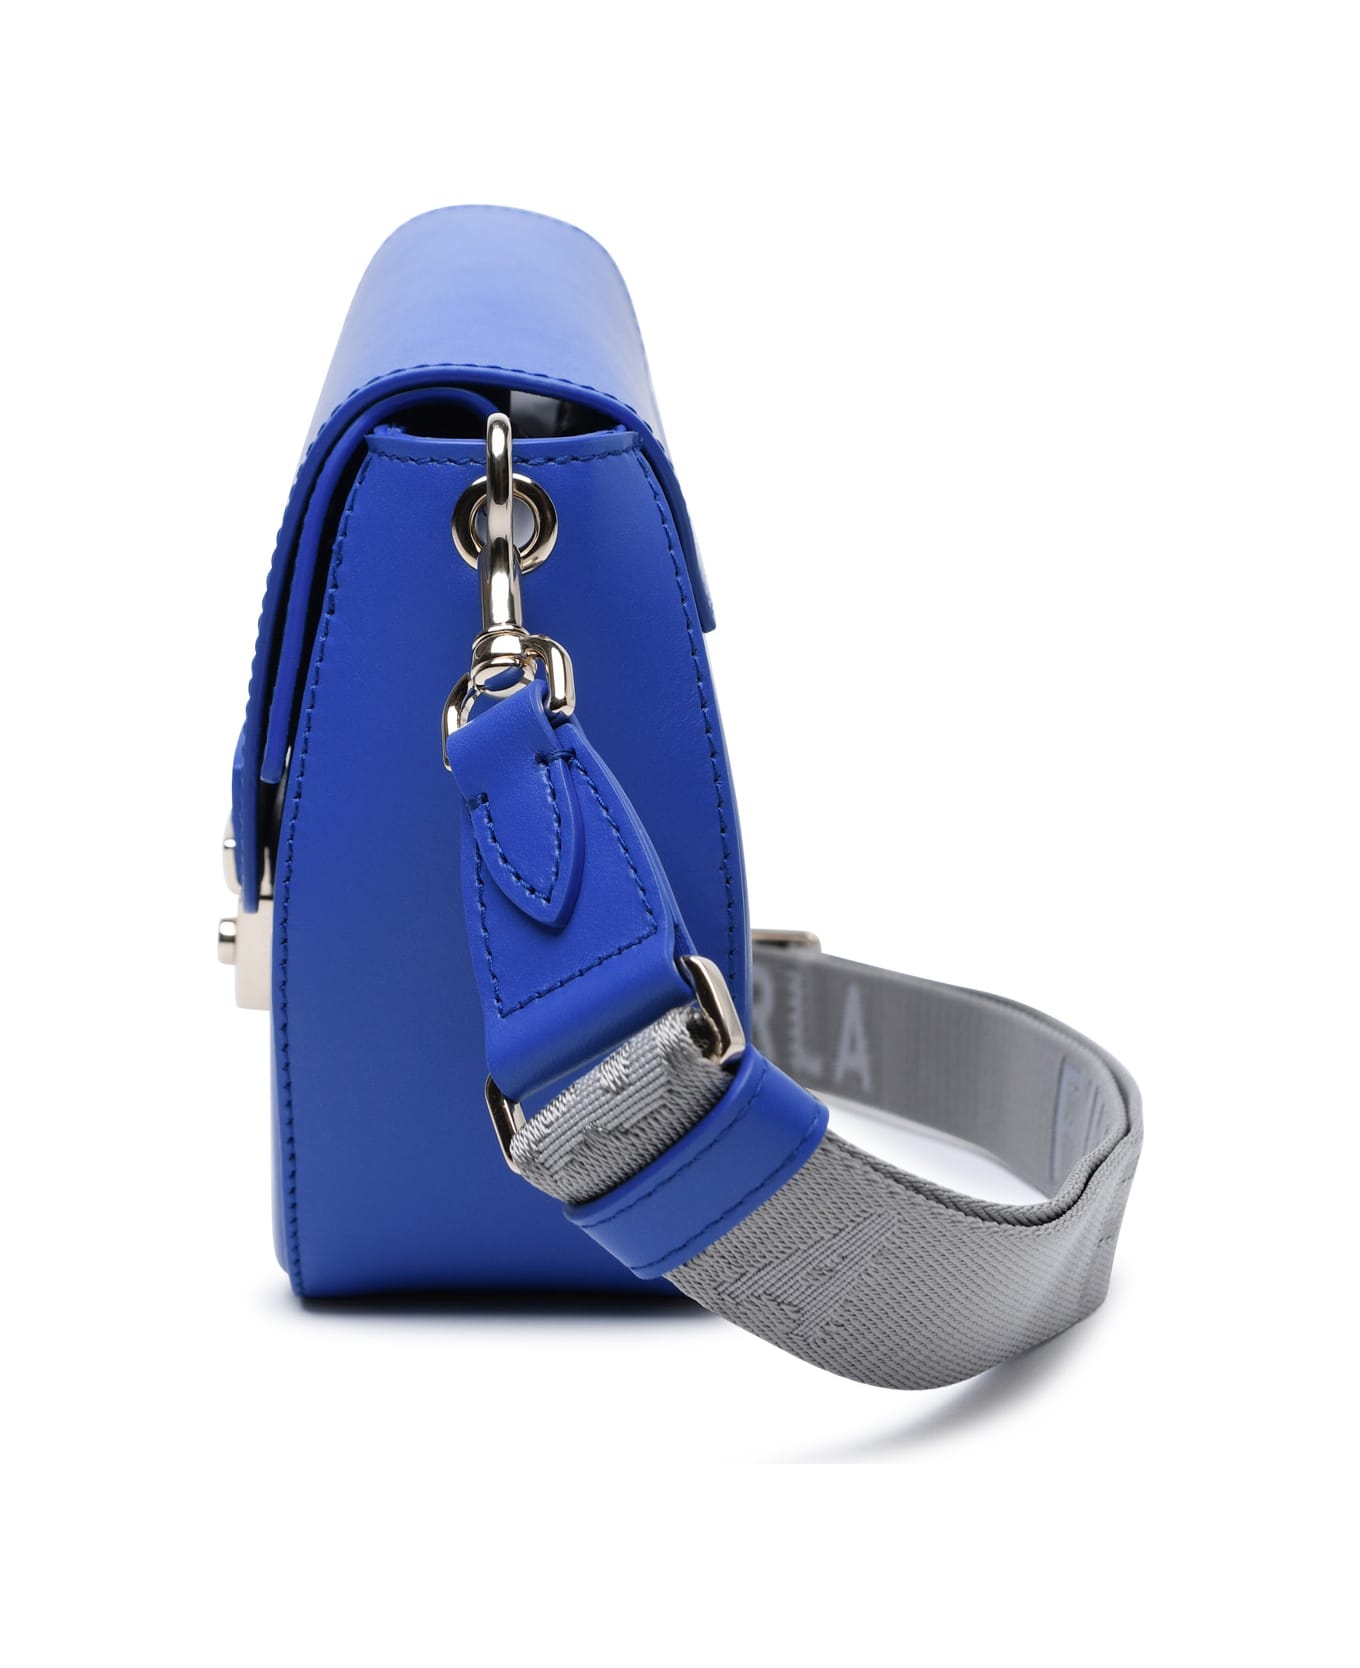 Furla 'metropolis Prisma' Blue Leather Blend Bag - S Blu Cobalto トートバッグ